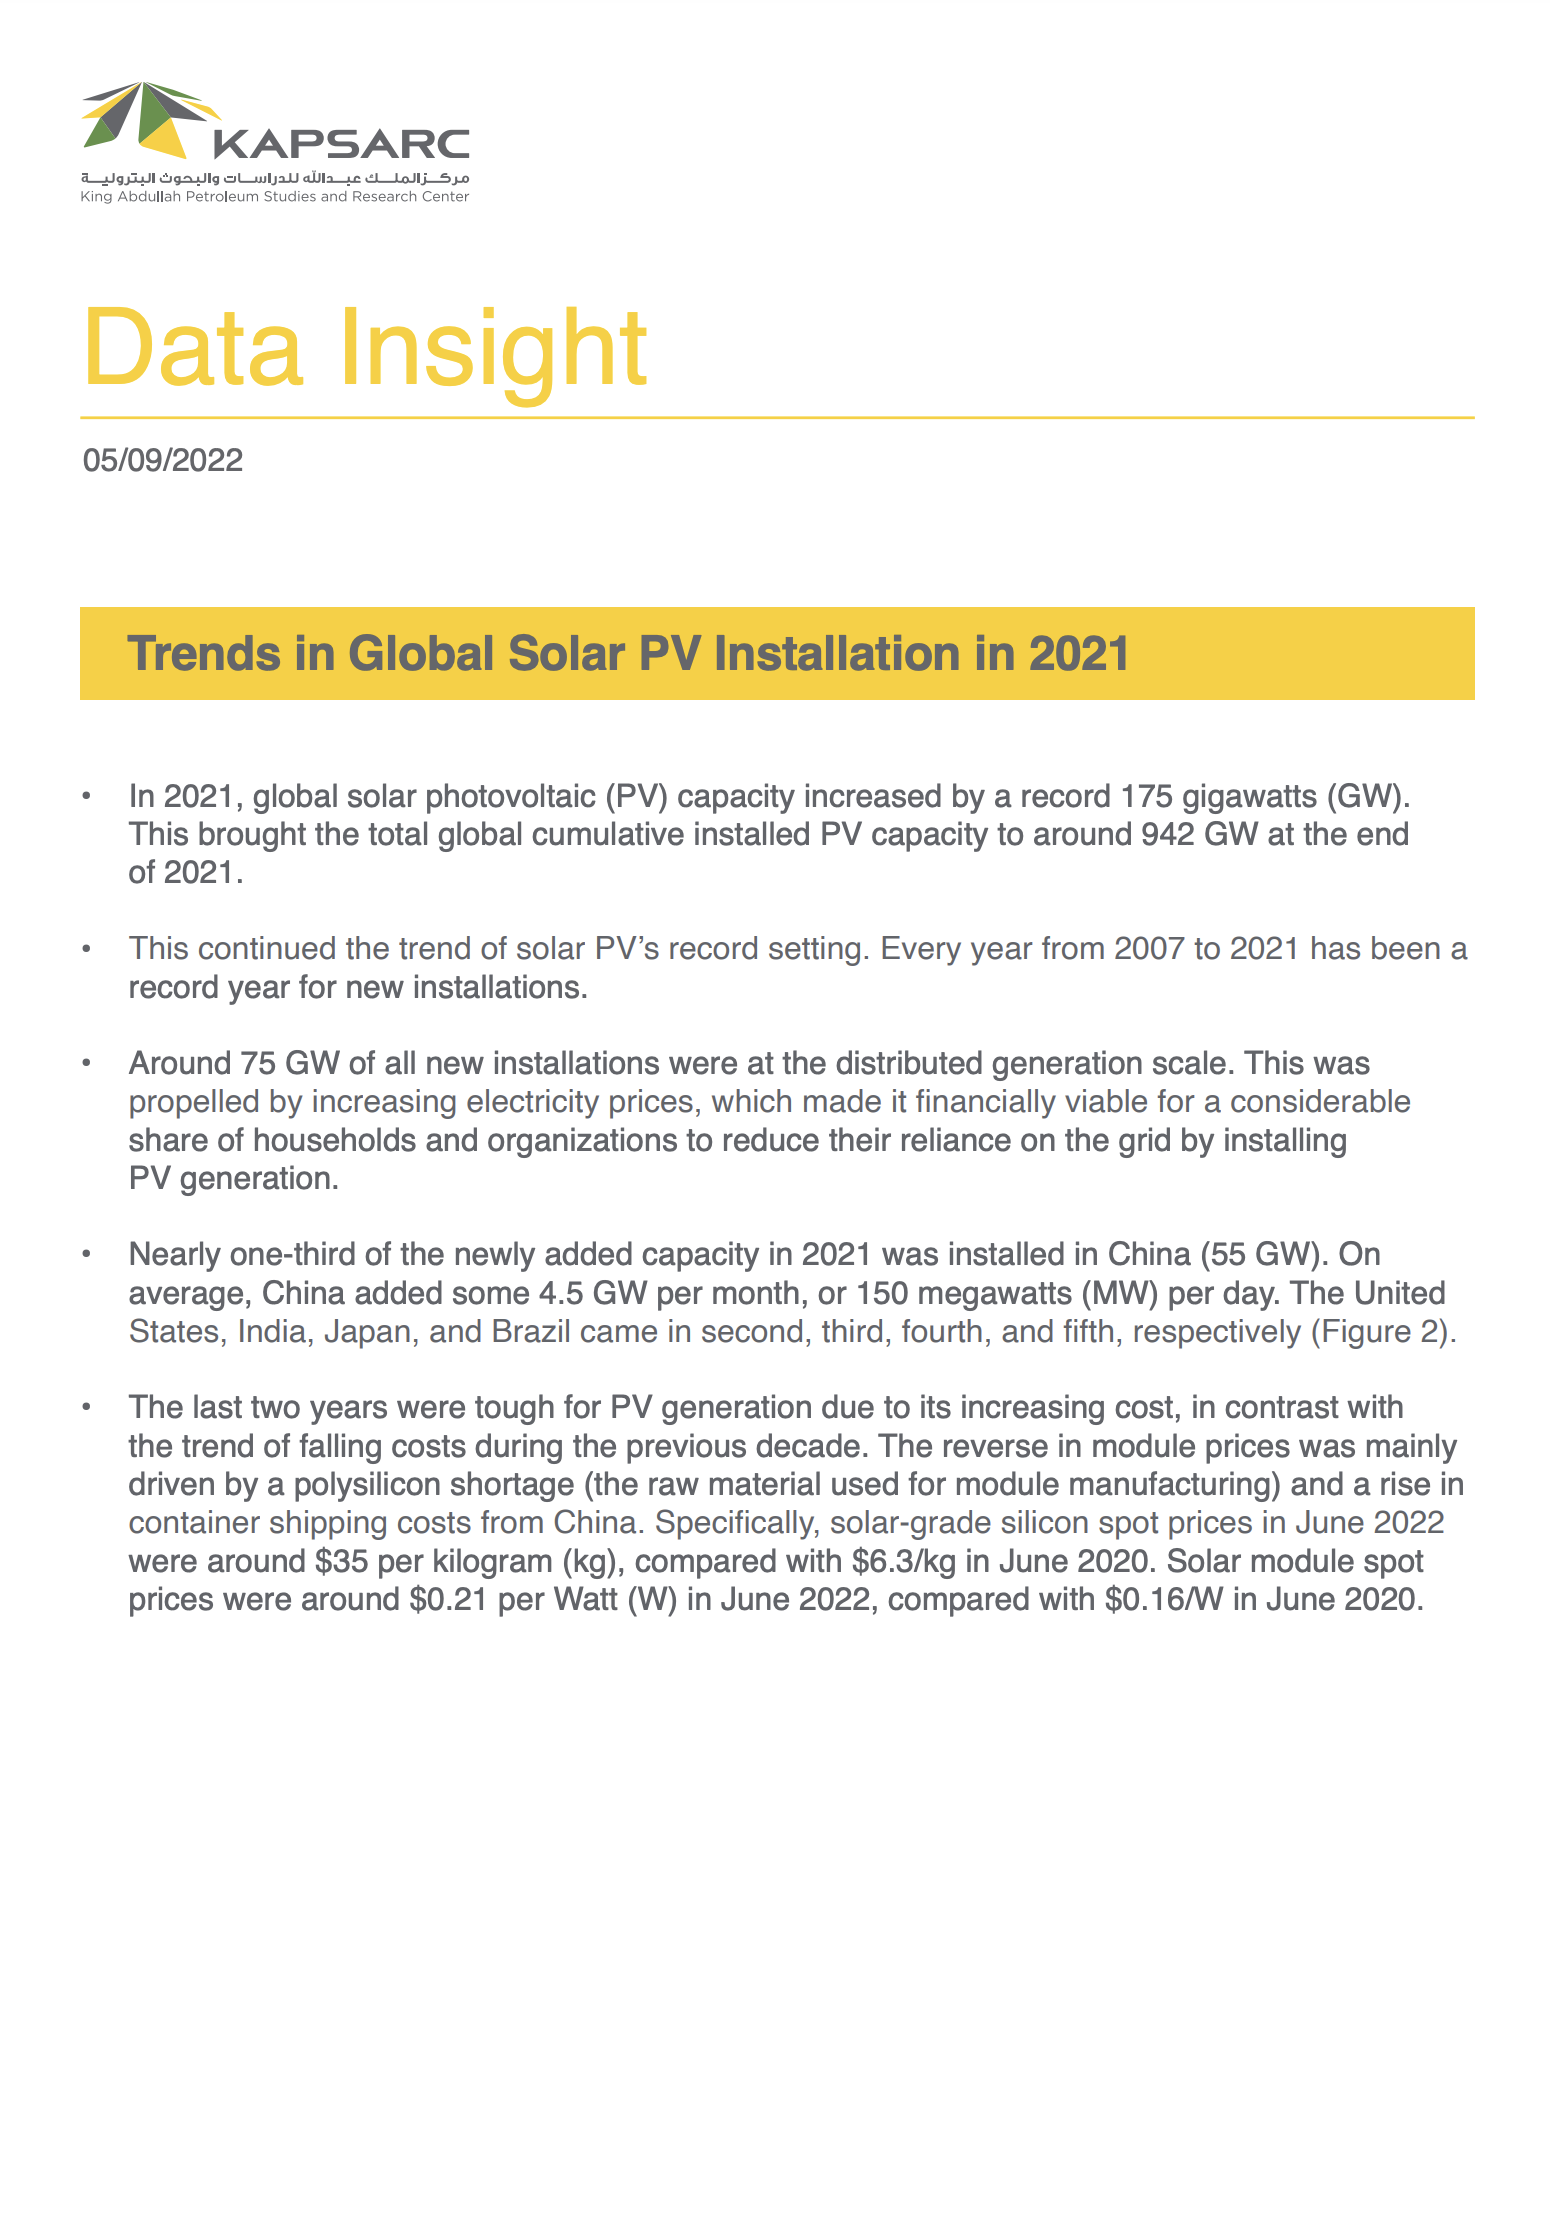 Trends in Global Solar PV Installation in 2021